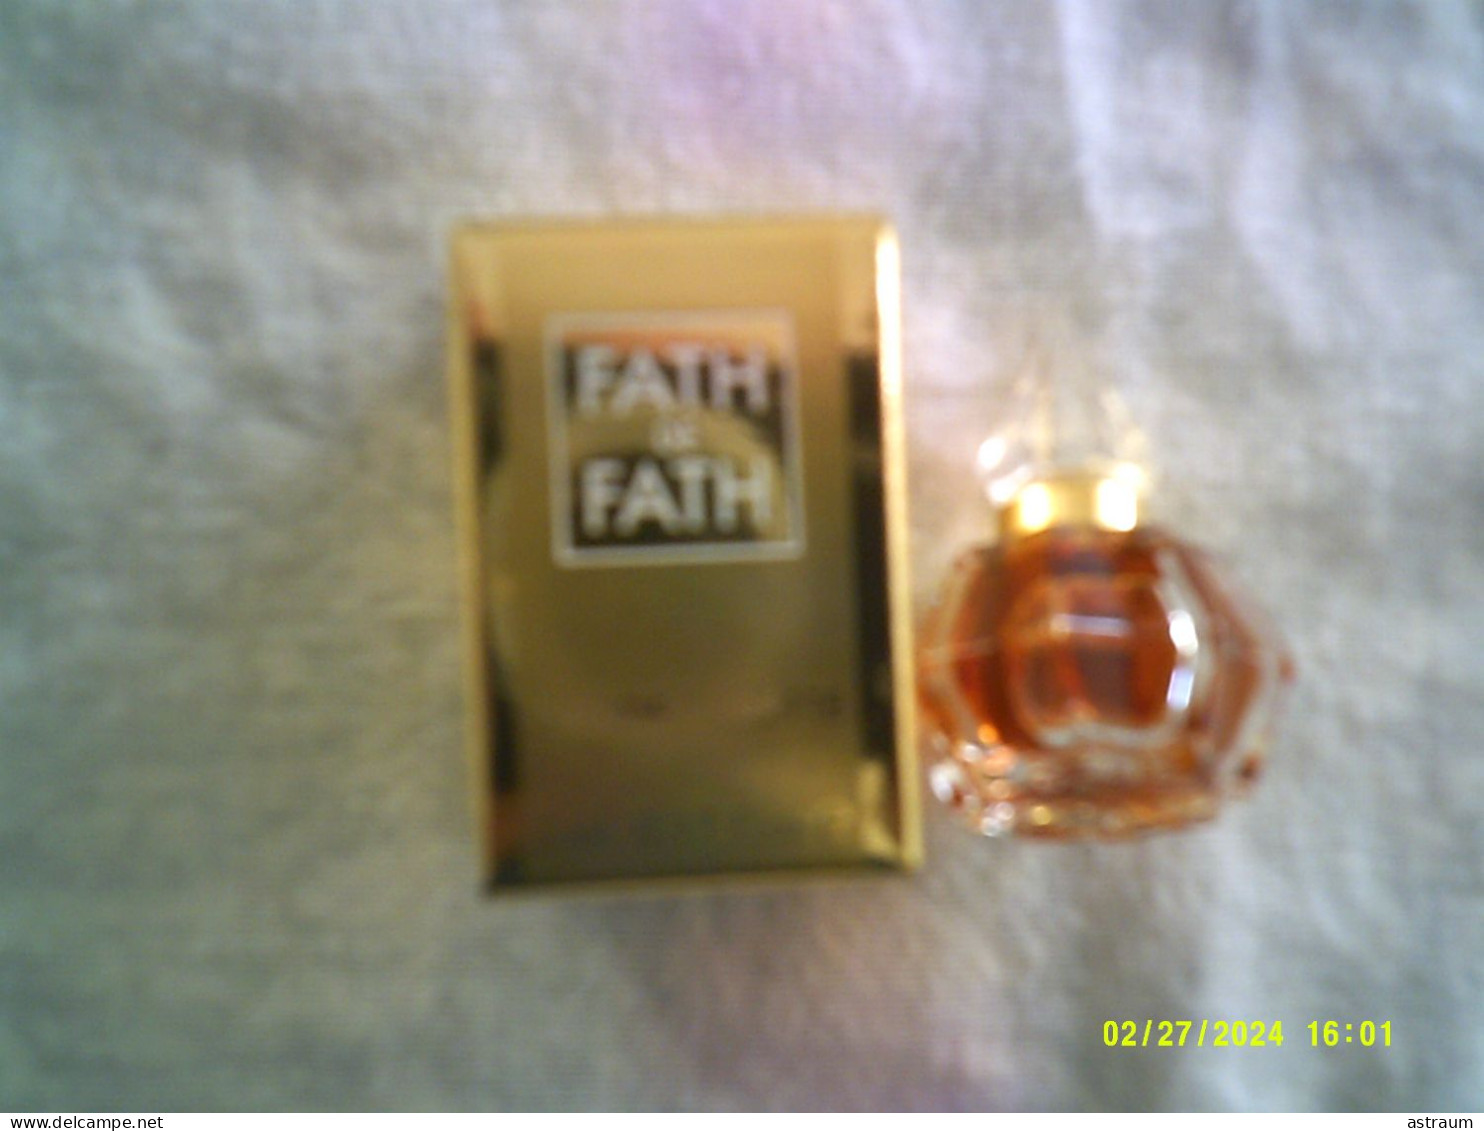 Miniature Ancienne Parfum - Fath De Fath - EDT - Pleine Avec Boite 5ml - Miniatures Womens' Fragrances (in Box)